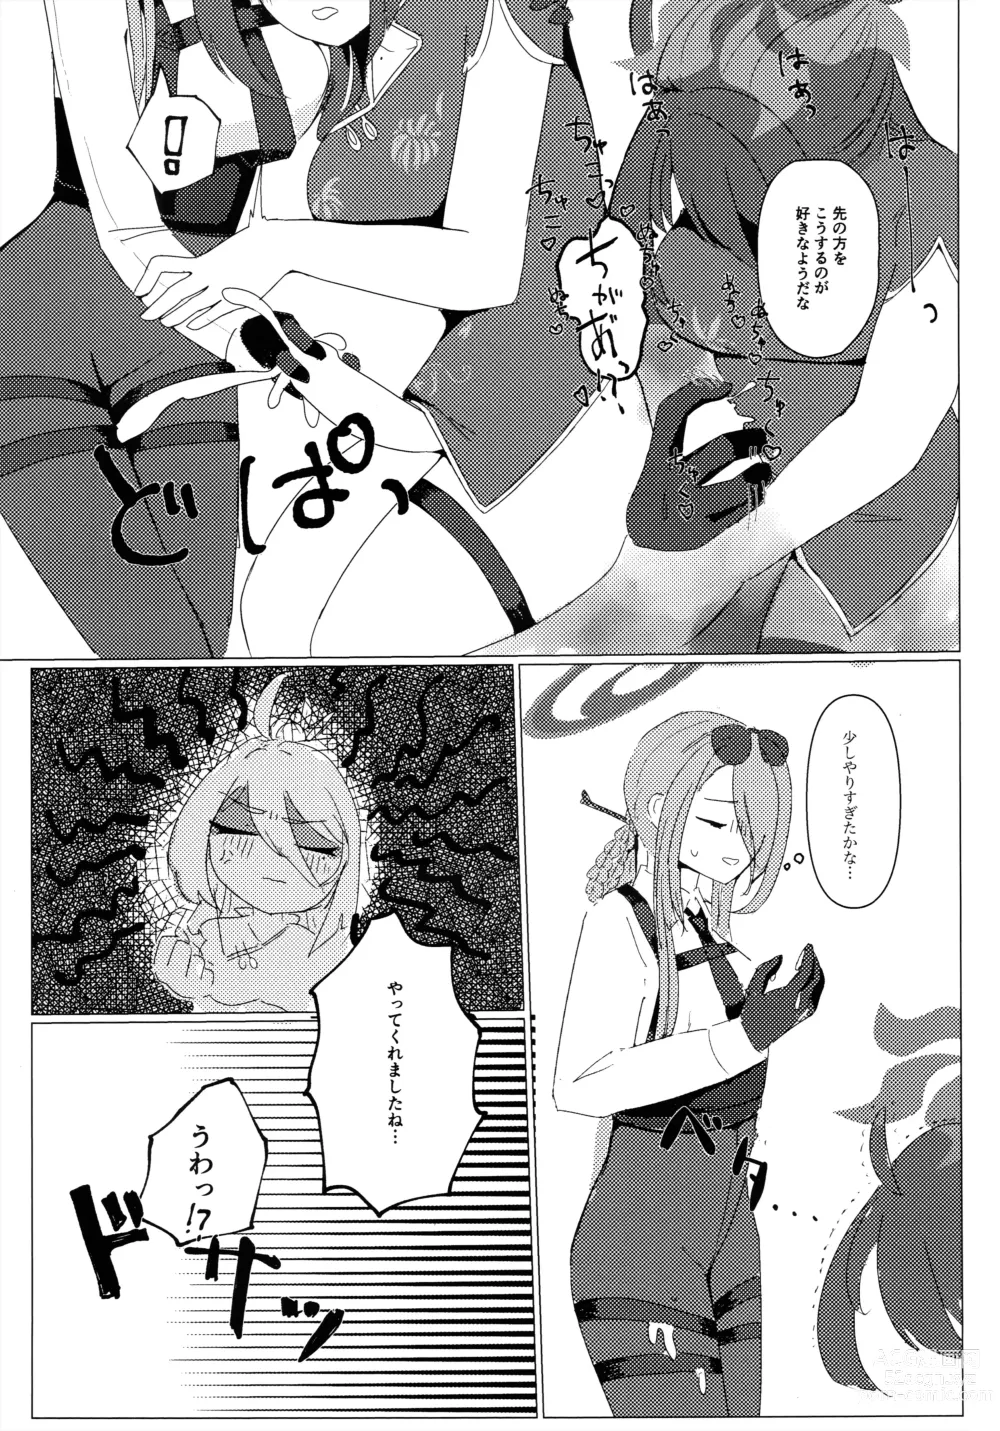 Page 6 of doujinshi Doushite Kou Natta!?